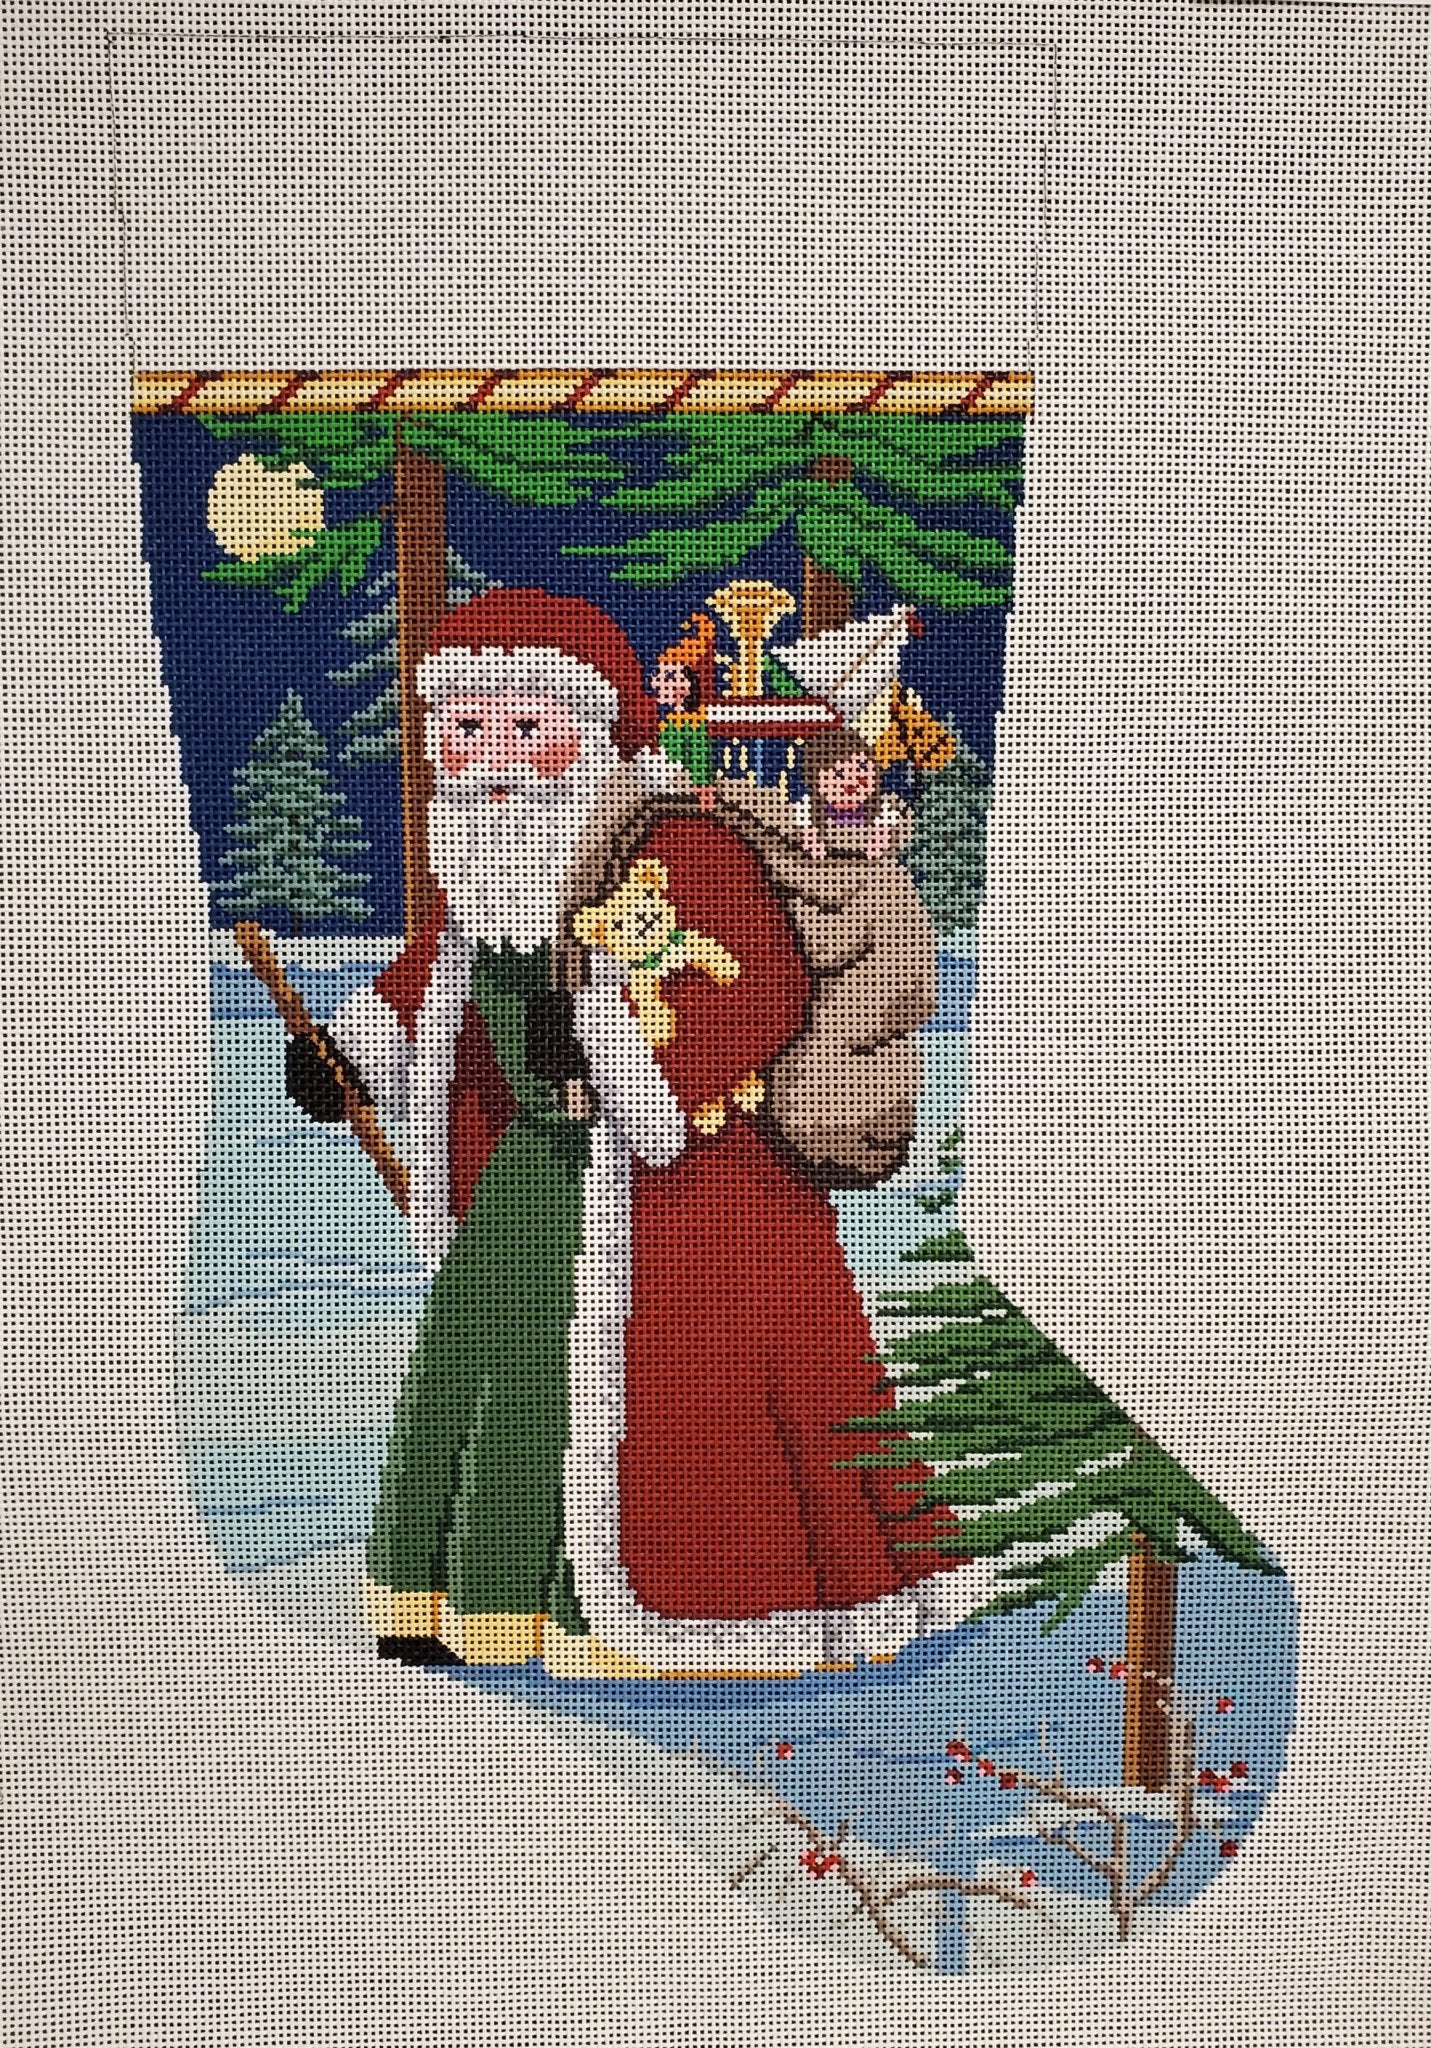 Santa with Walking Stick Stocking - The Flying Needles